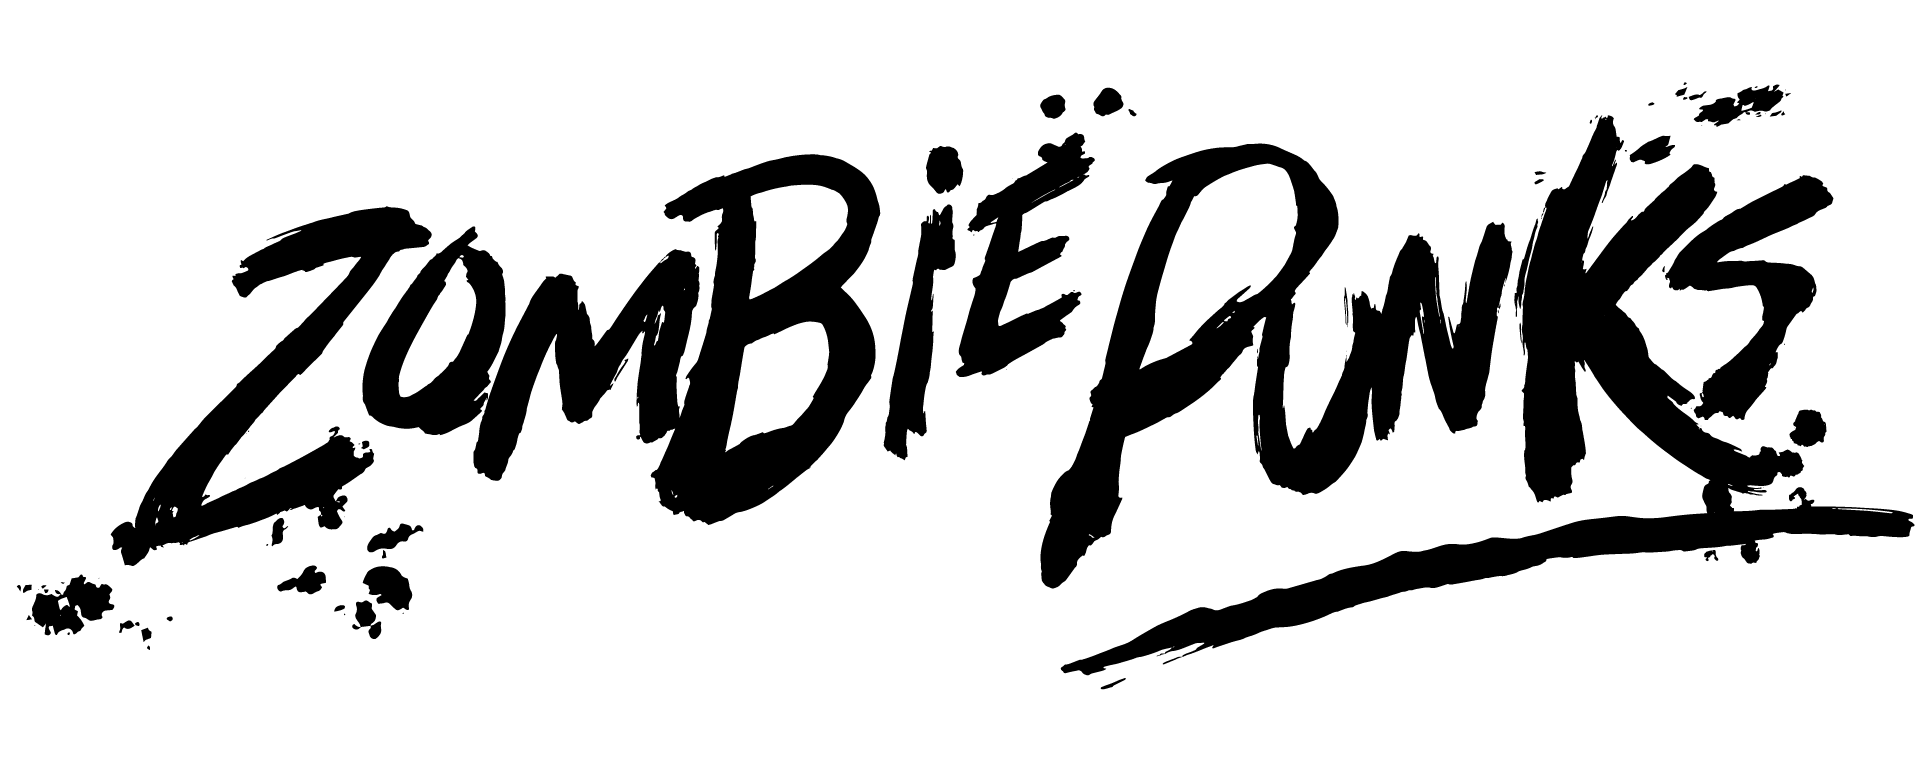 Zombie Punks - The Retro Horror Video Font